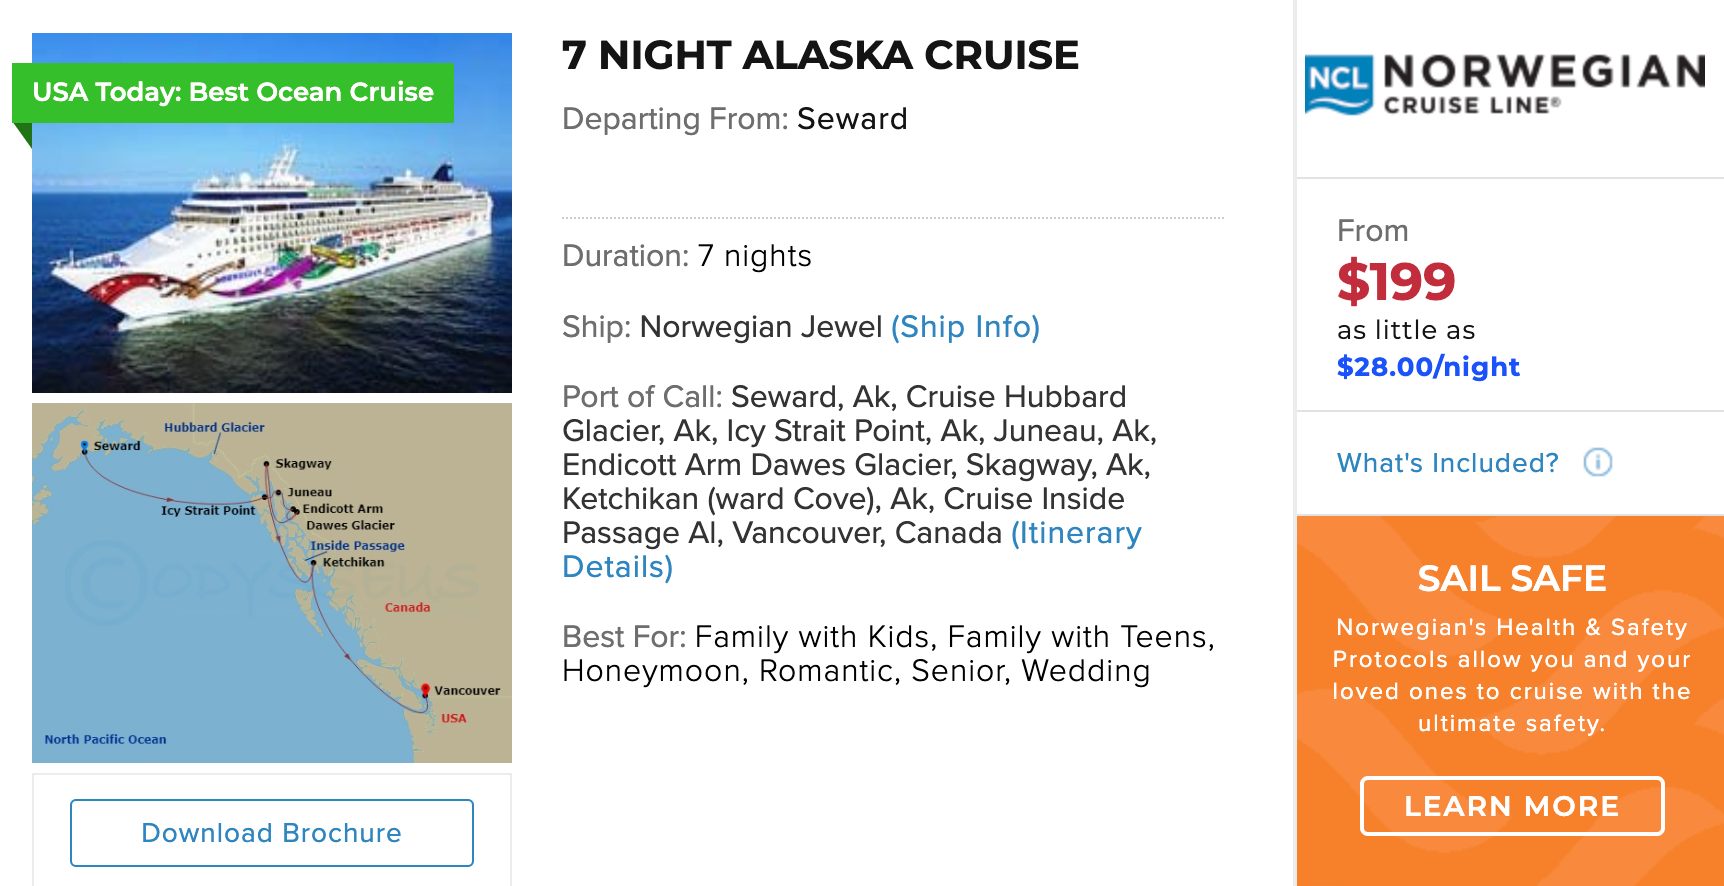 7 Night Alaska Cruise